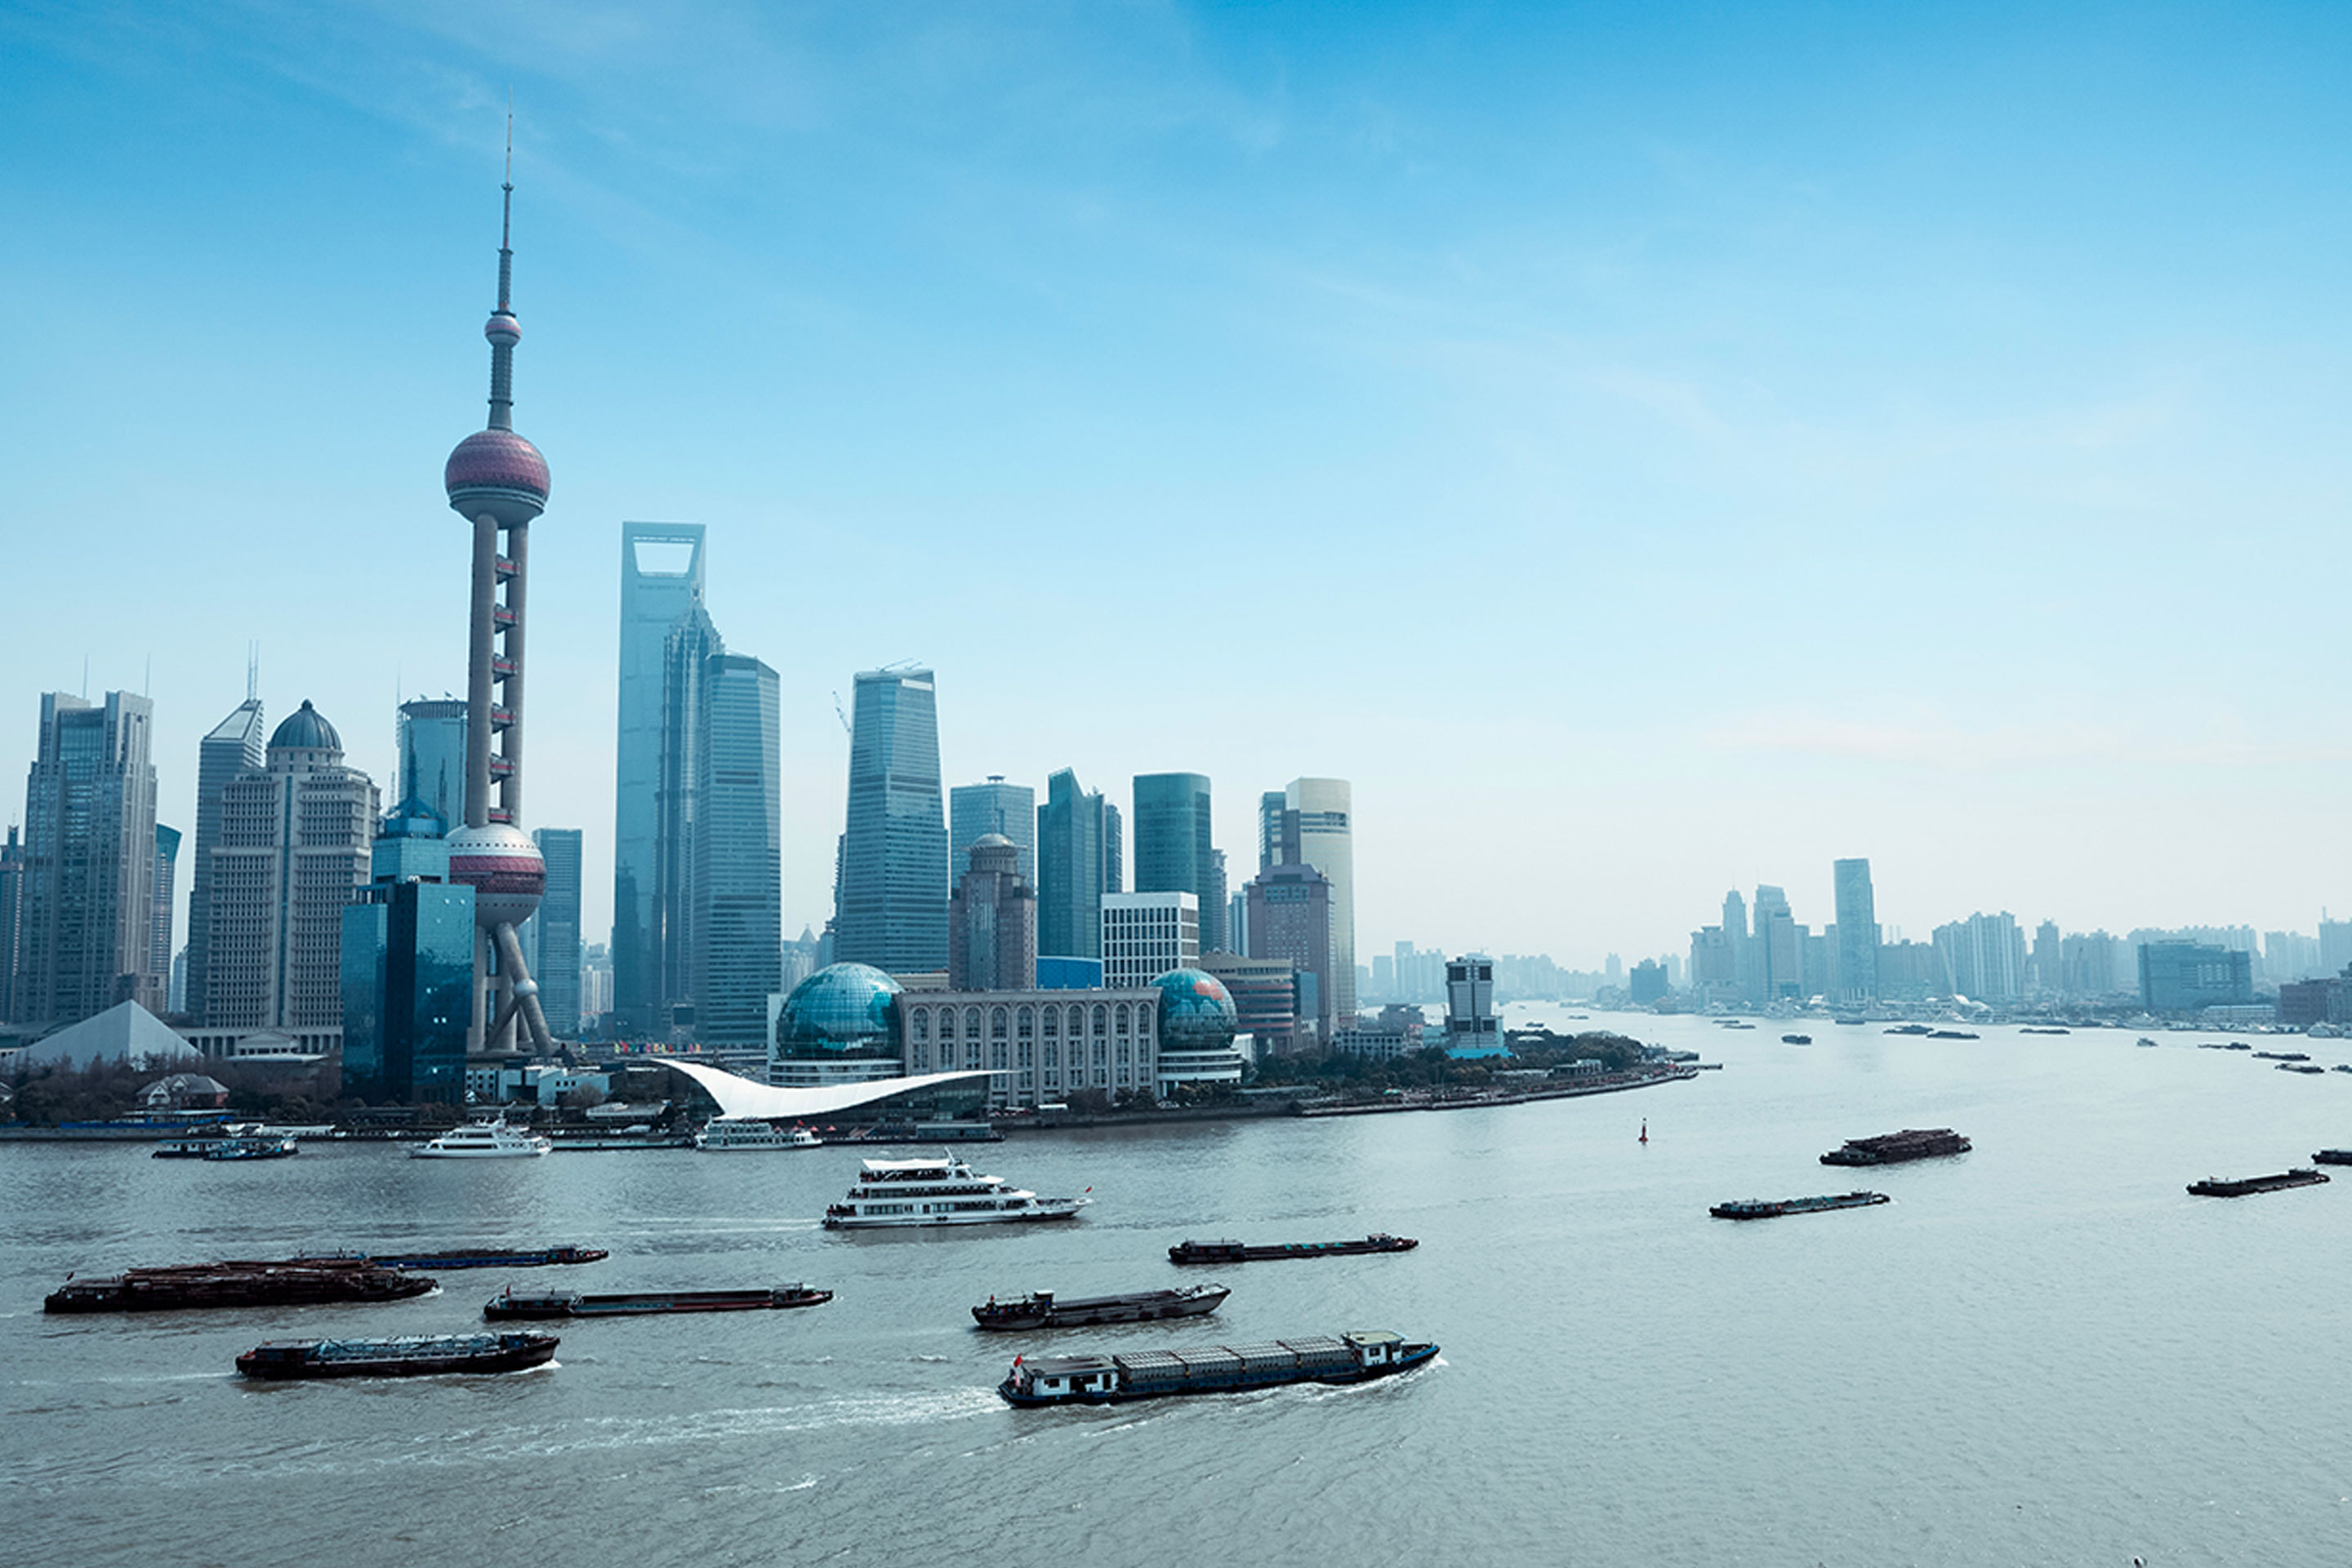 An image of Shanghai to highlight Marintec